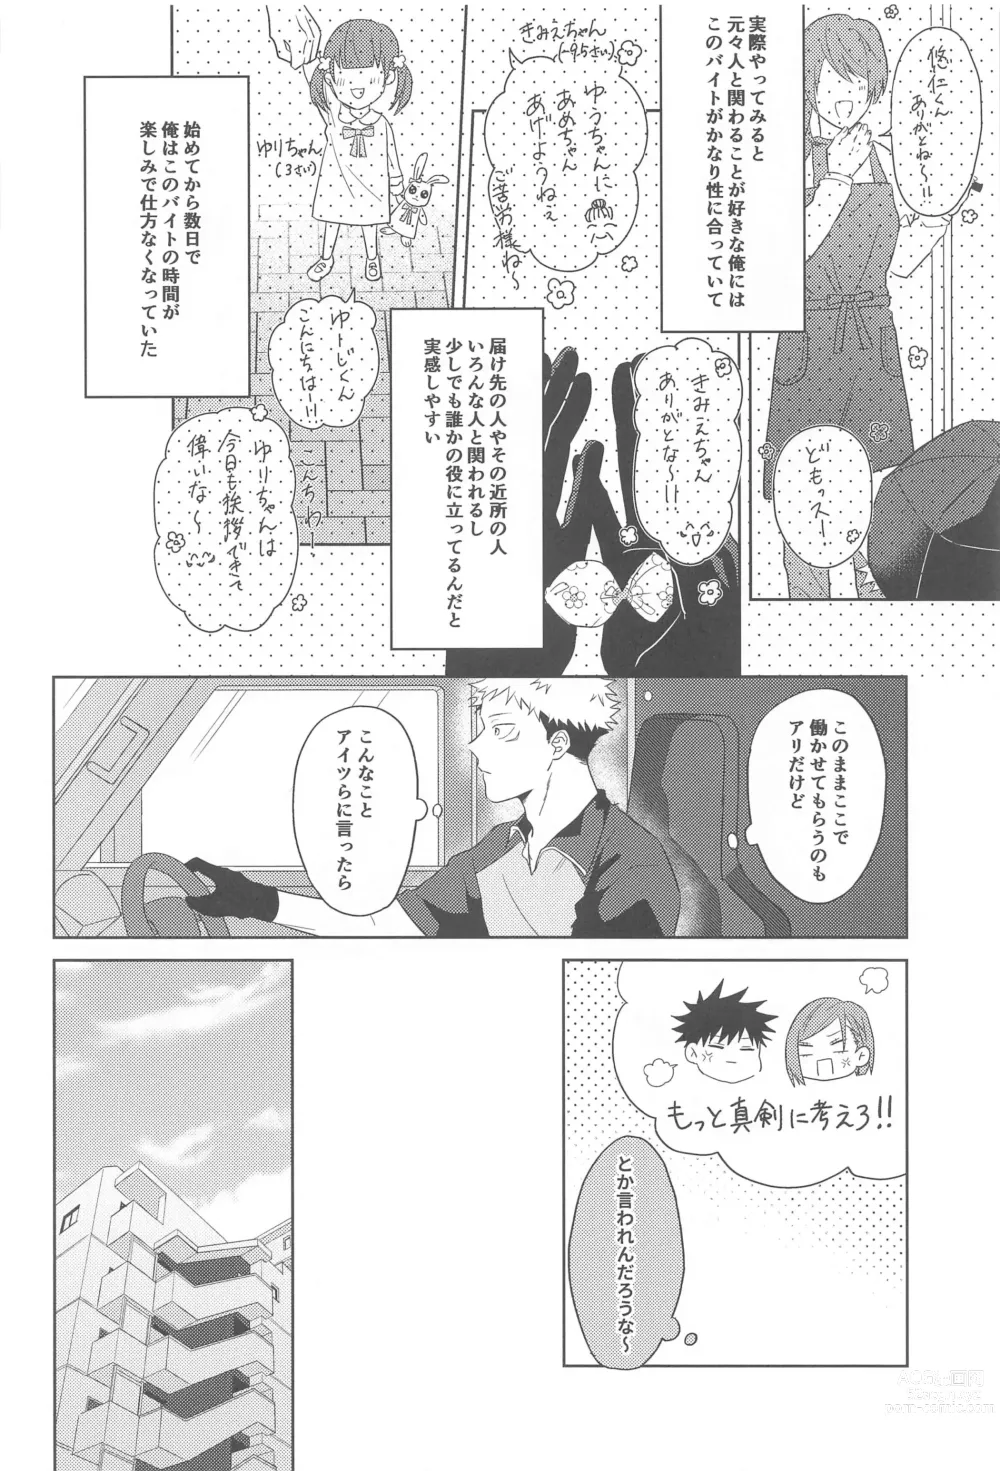 Page 5 of doujinshi Doushite Kounatta?!